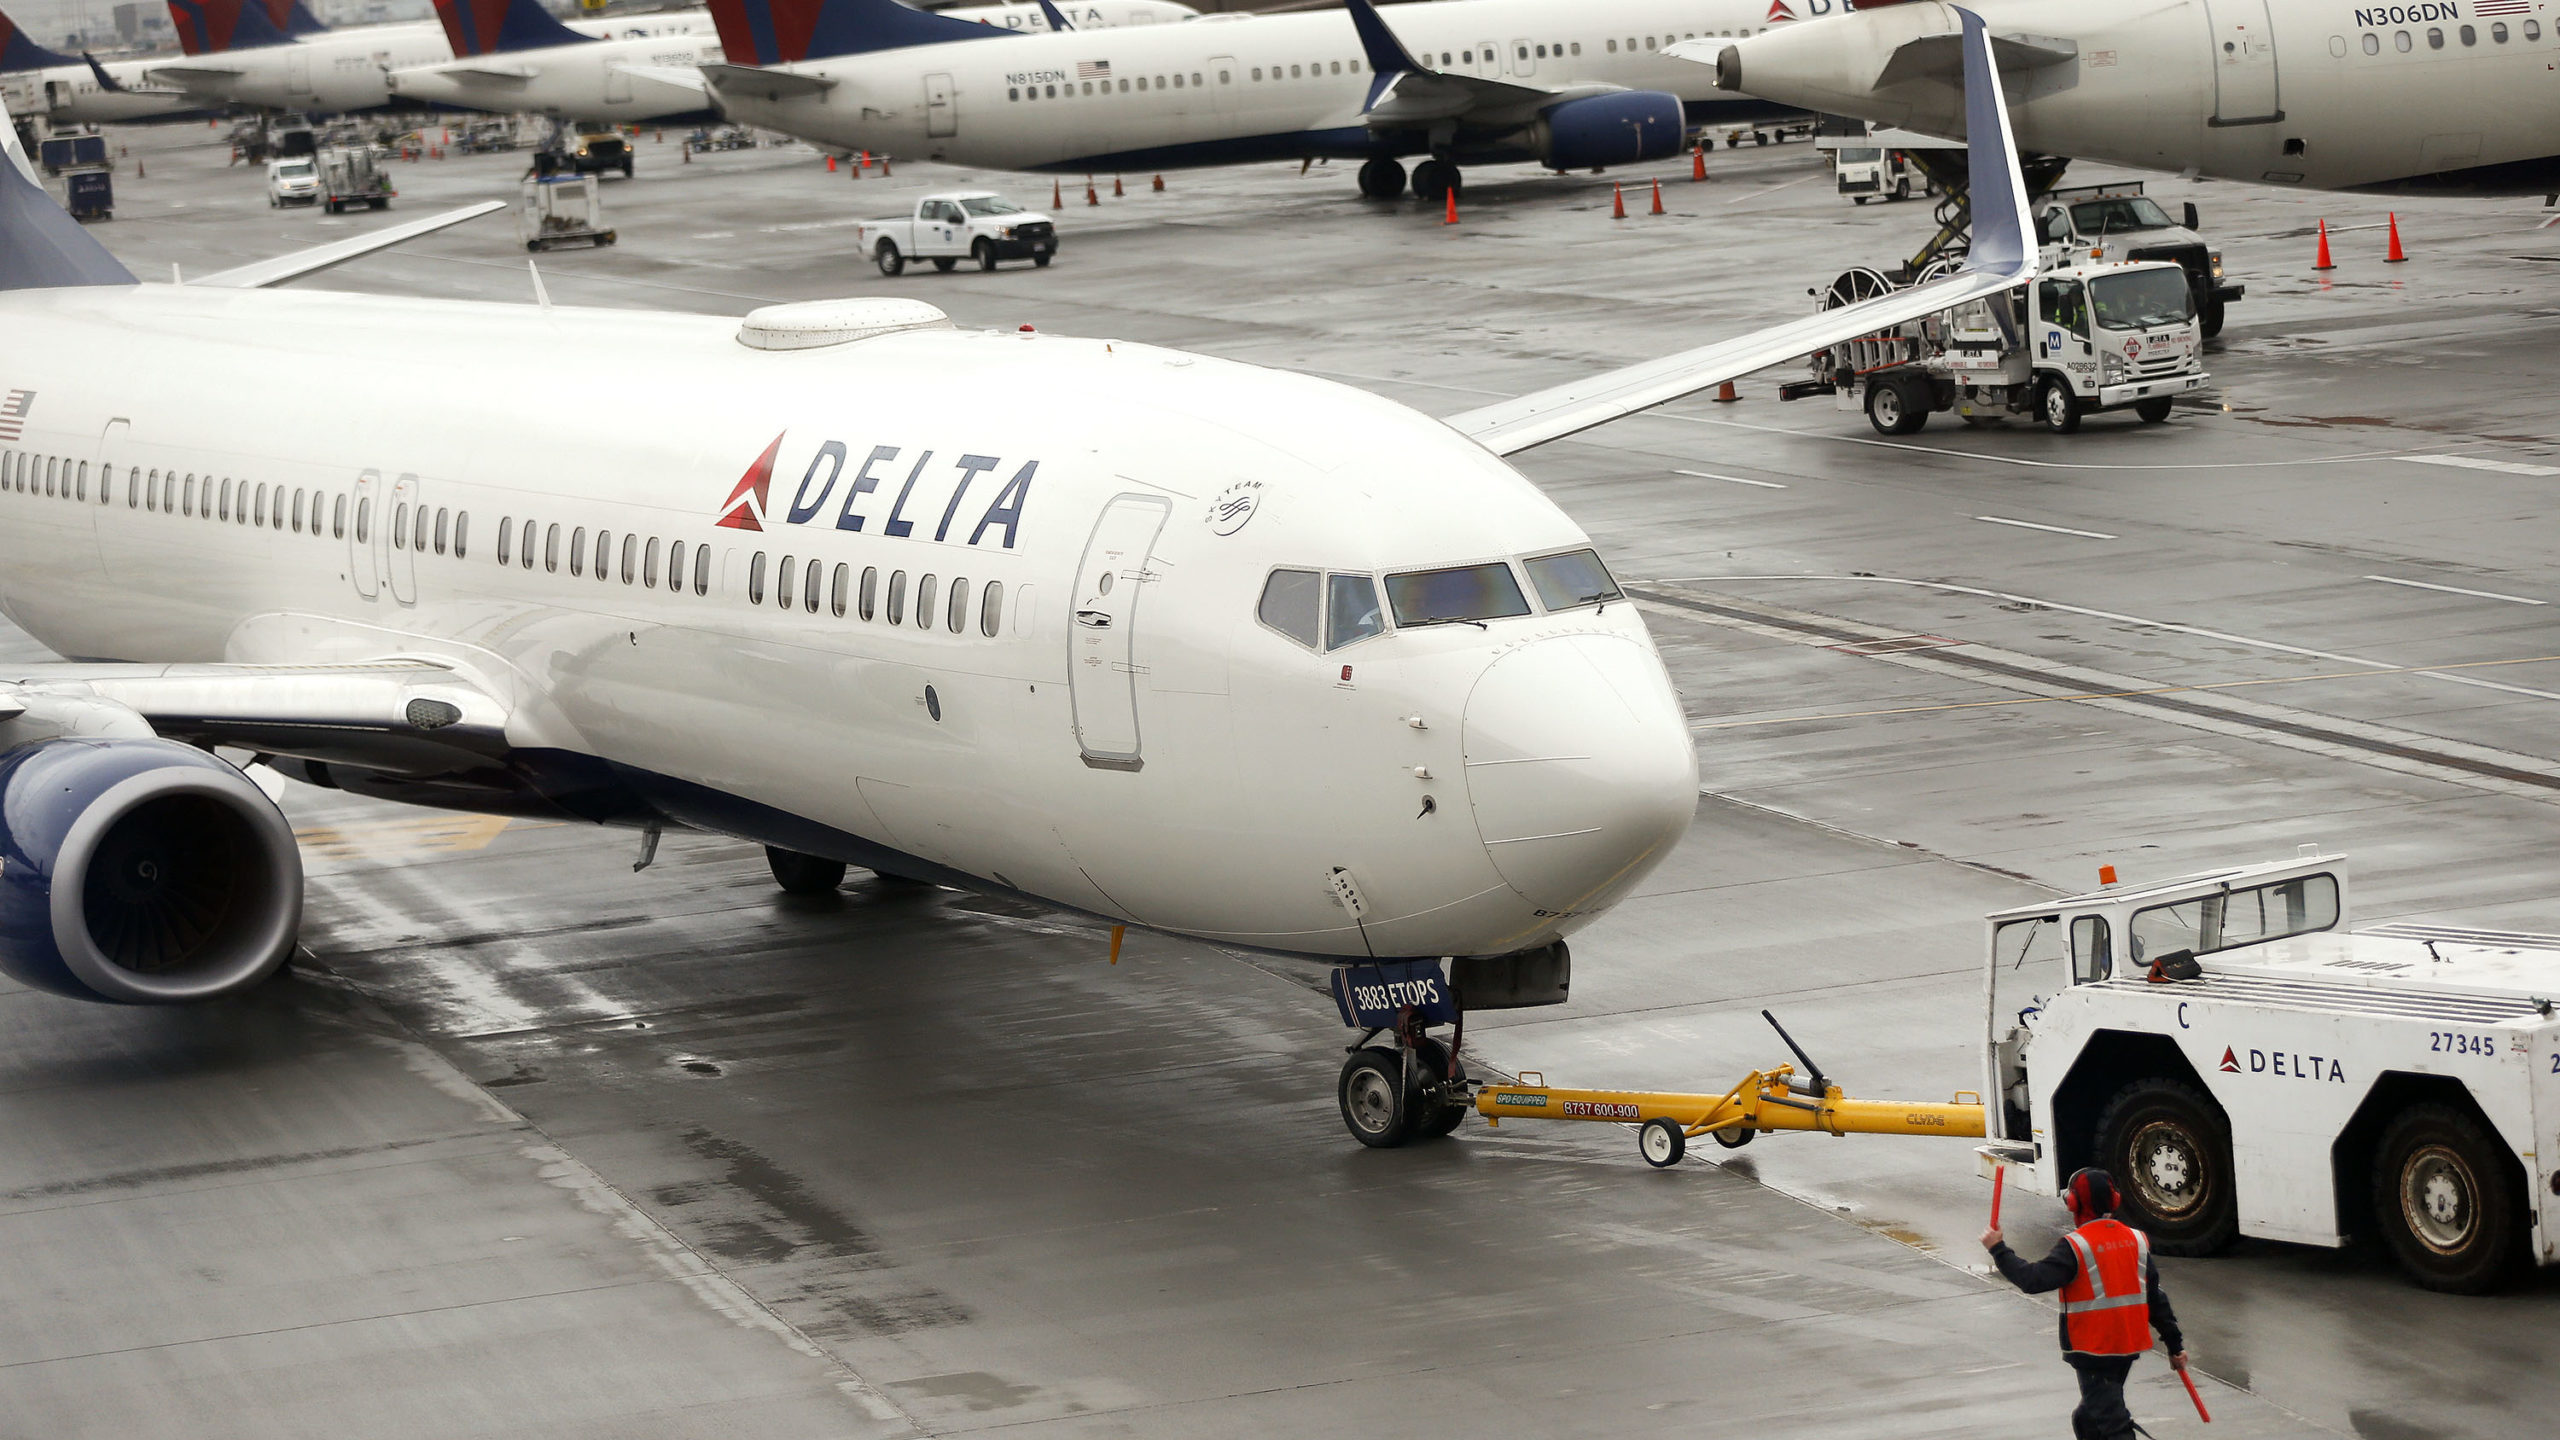 FILES -- A Delta Air Lines plane departs from a hangar at Salt Lake City International Airport...